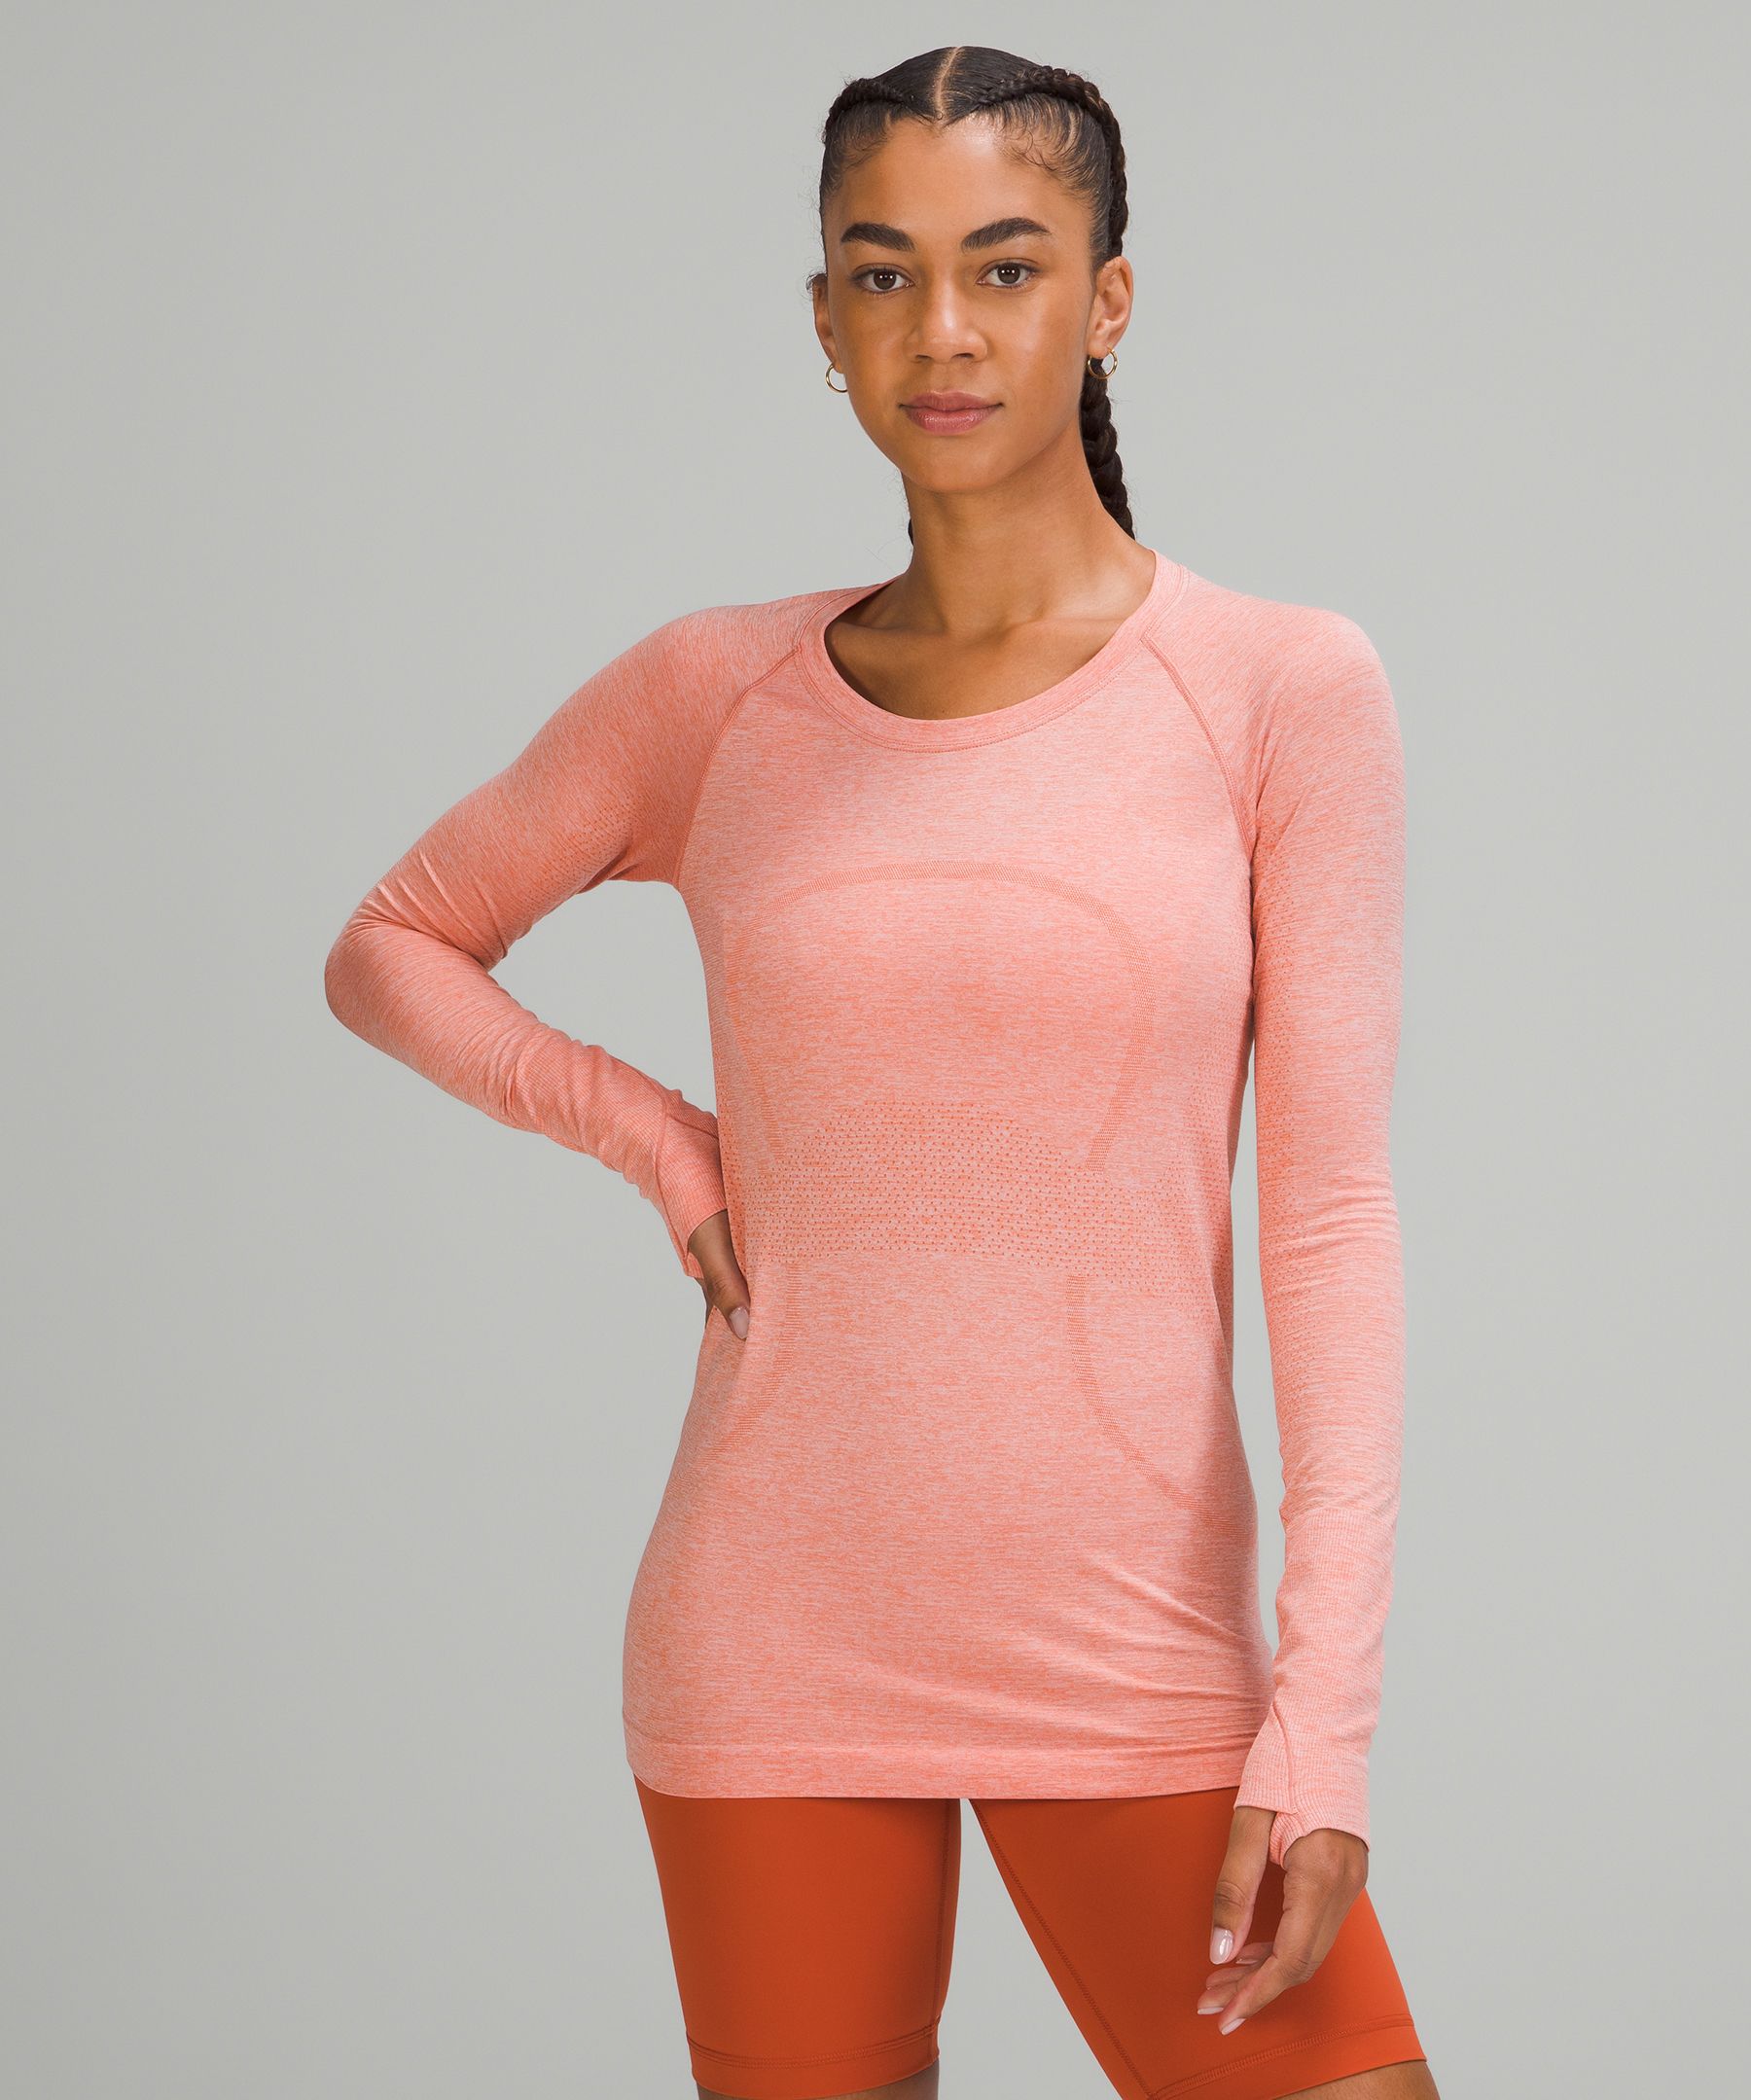 Lululemon Swiftly Tech Long Sleeve Shirt 2.0 In Pink Peony/pink